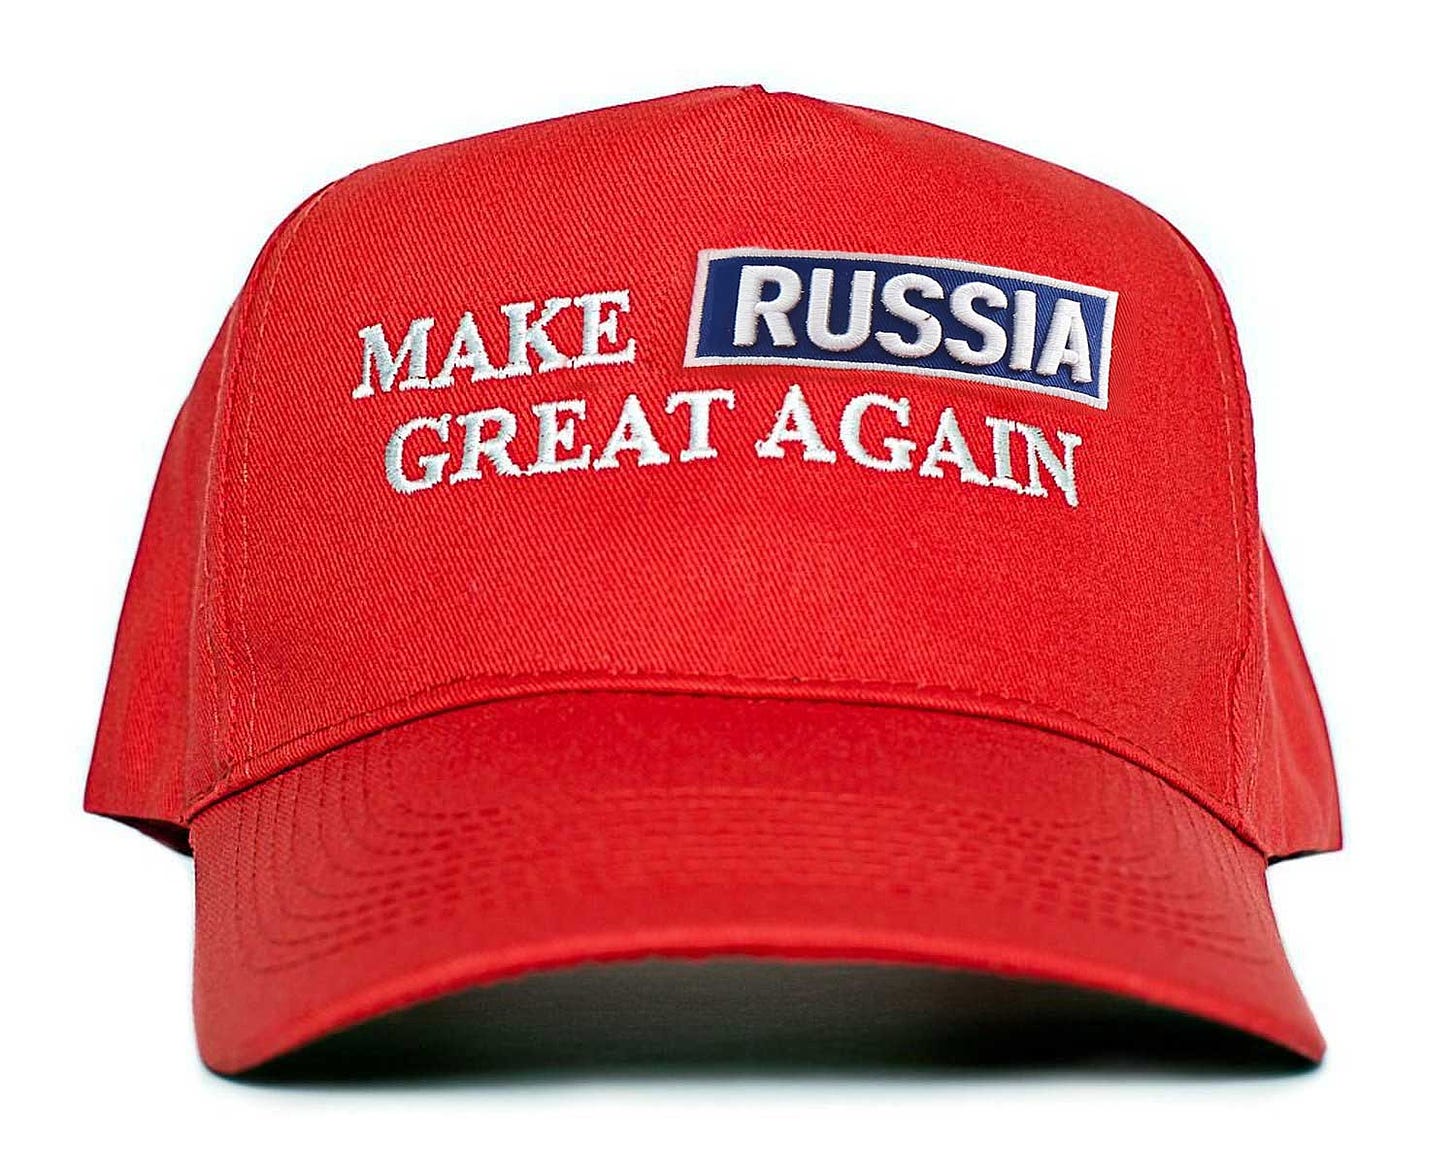 Make Russia Great Again